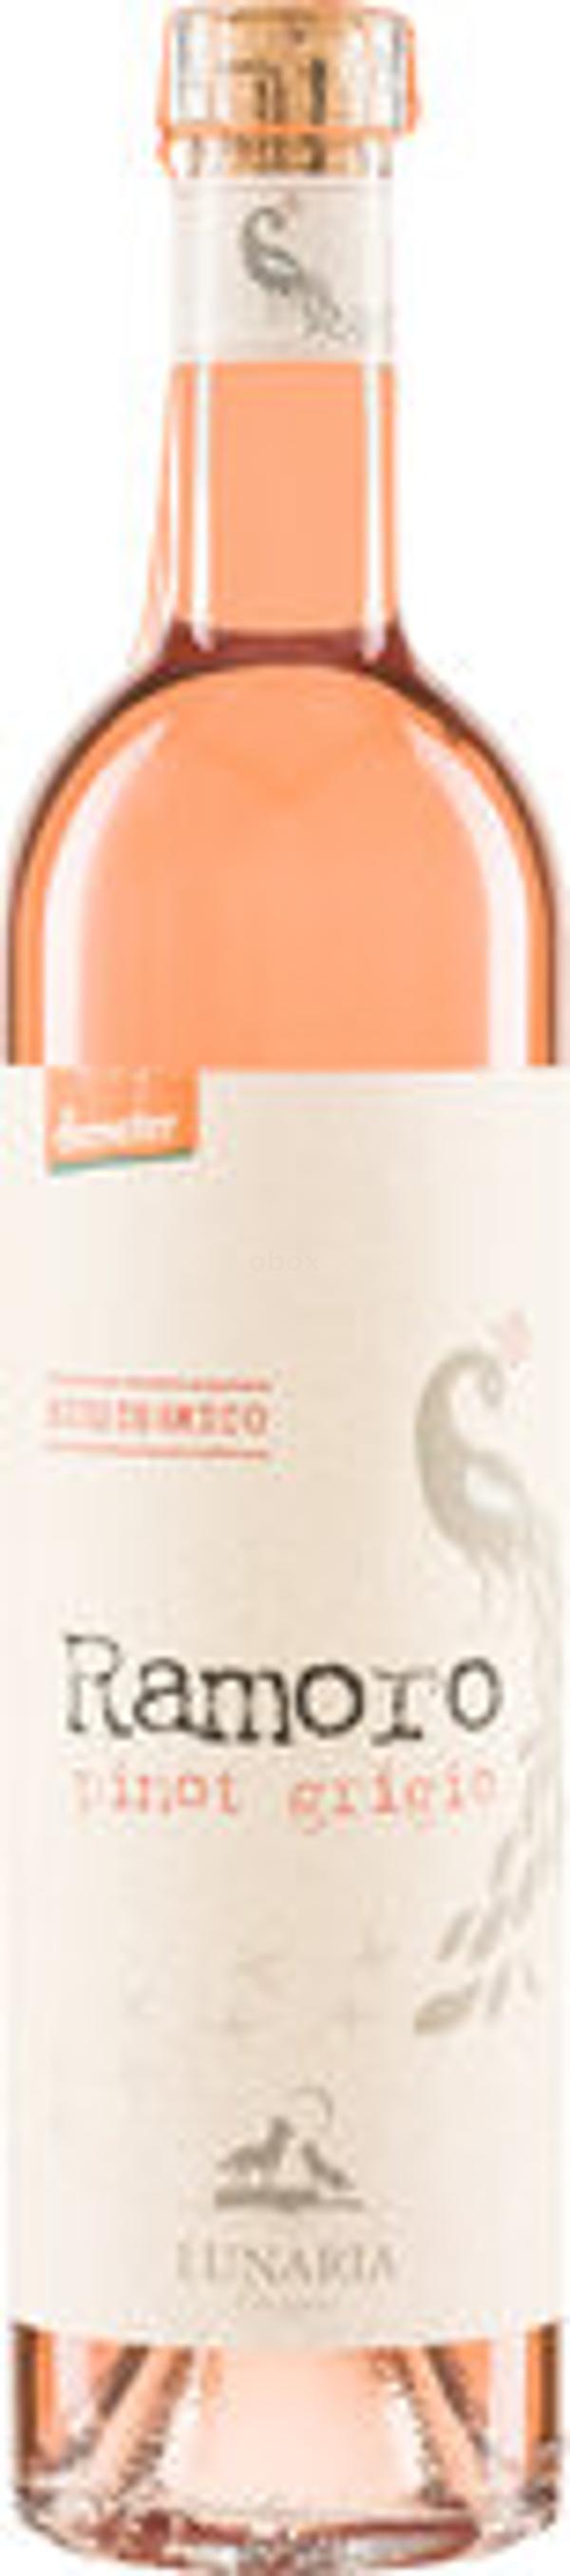 Produktfoto zu Pinot Grigio 'Ramoro' Terre di Chieti IGT, Weiß halbtrocken 0,75l